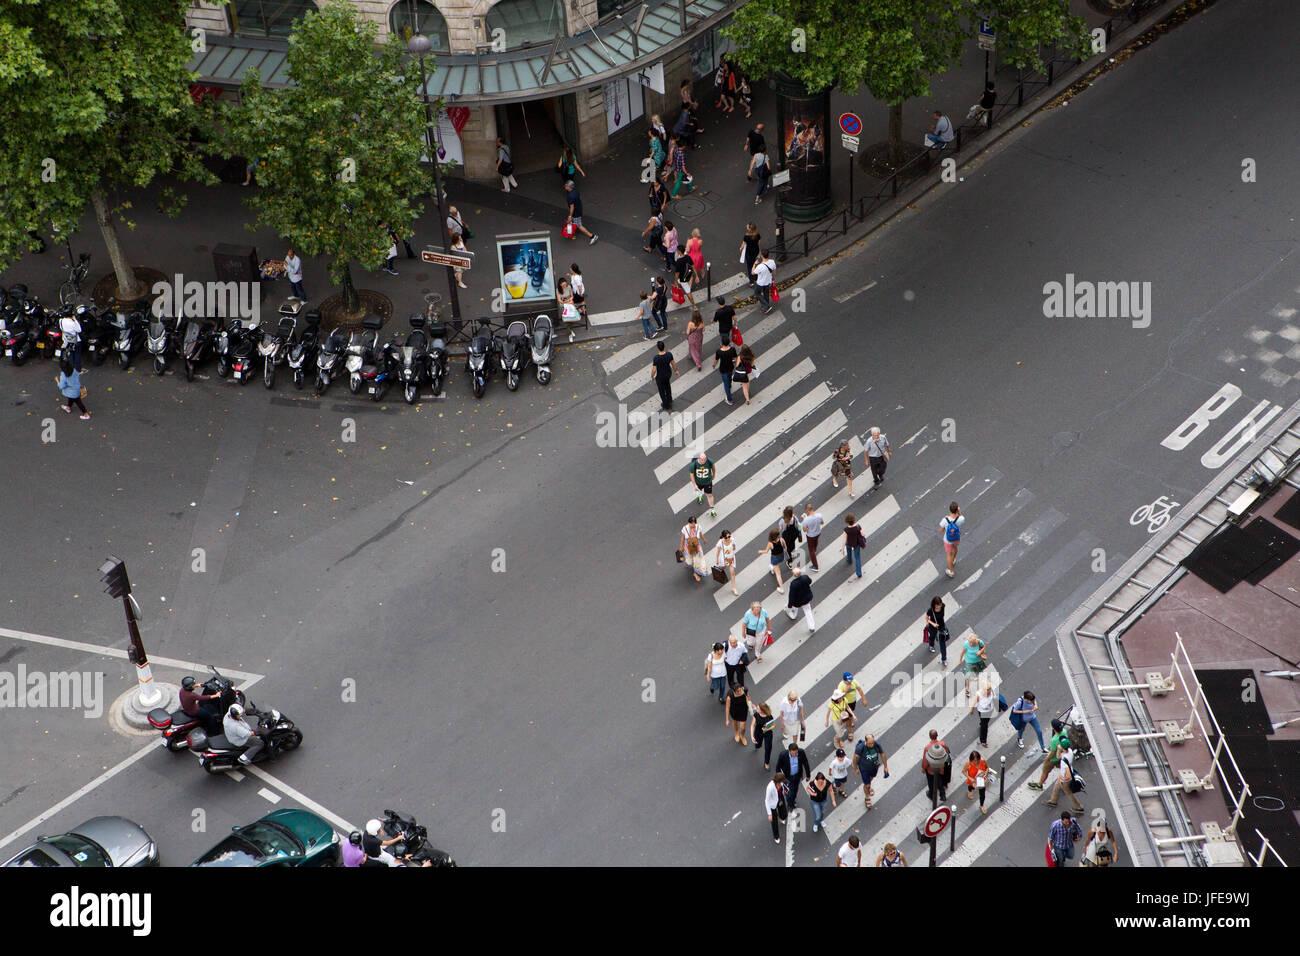 Pedestrians in a crosswalk near the Paris Opera House, Garnier Palace. Stock Photo